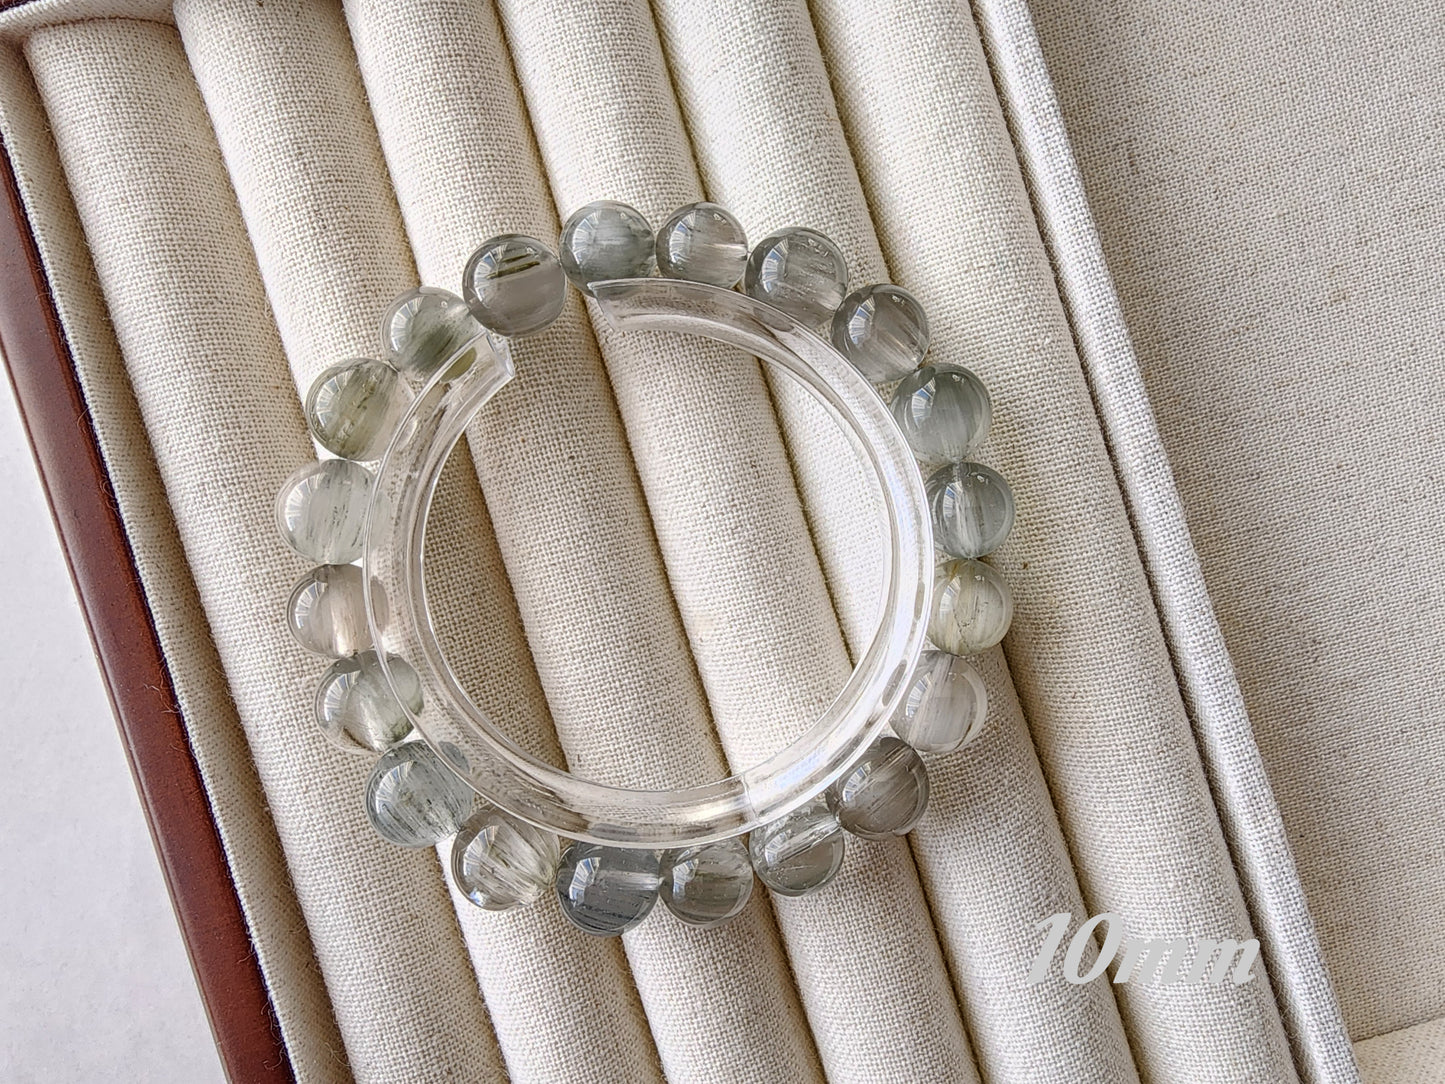 [Bracelet] Chic Gray-Blue Rabbit Hair Quartz 灰蓝兔毛 Bracelets - Elegant Round Beads for Stylish Comfort